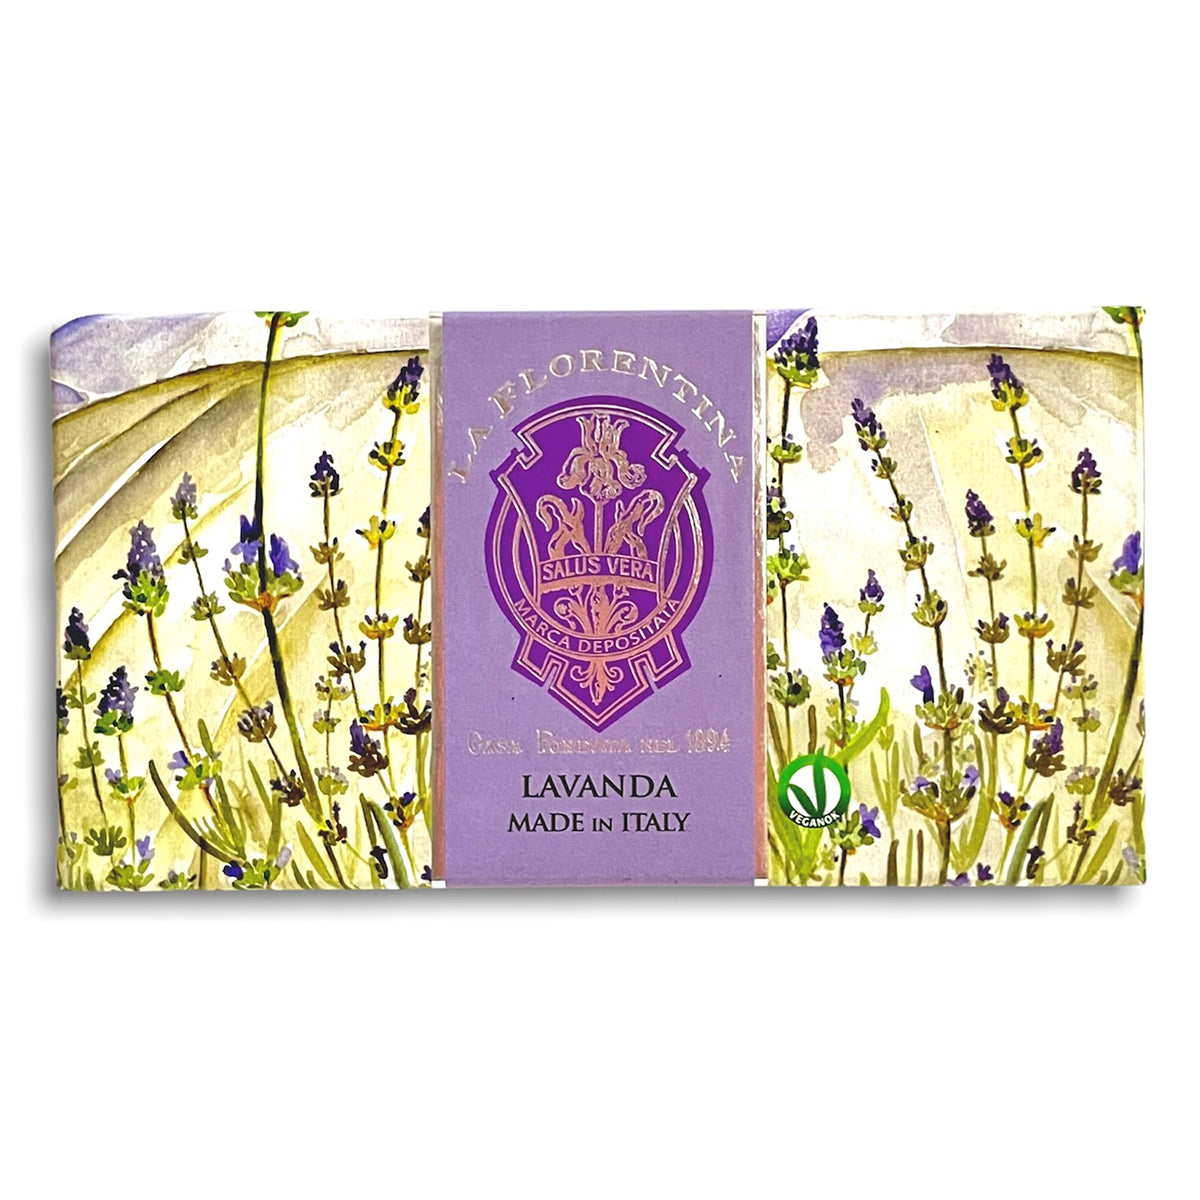 Luxury Lavender Hand Soap - Box of 2